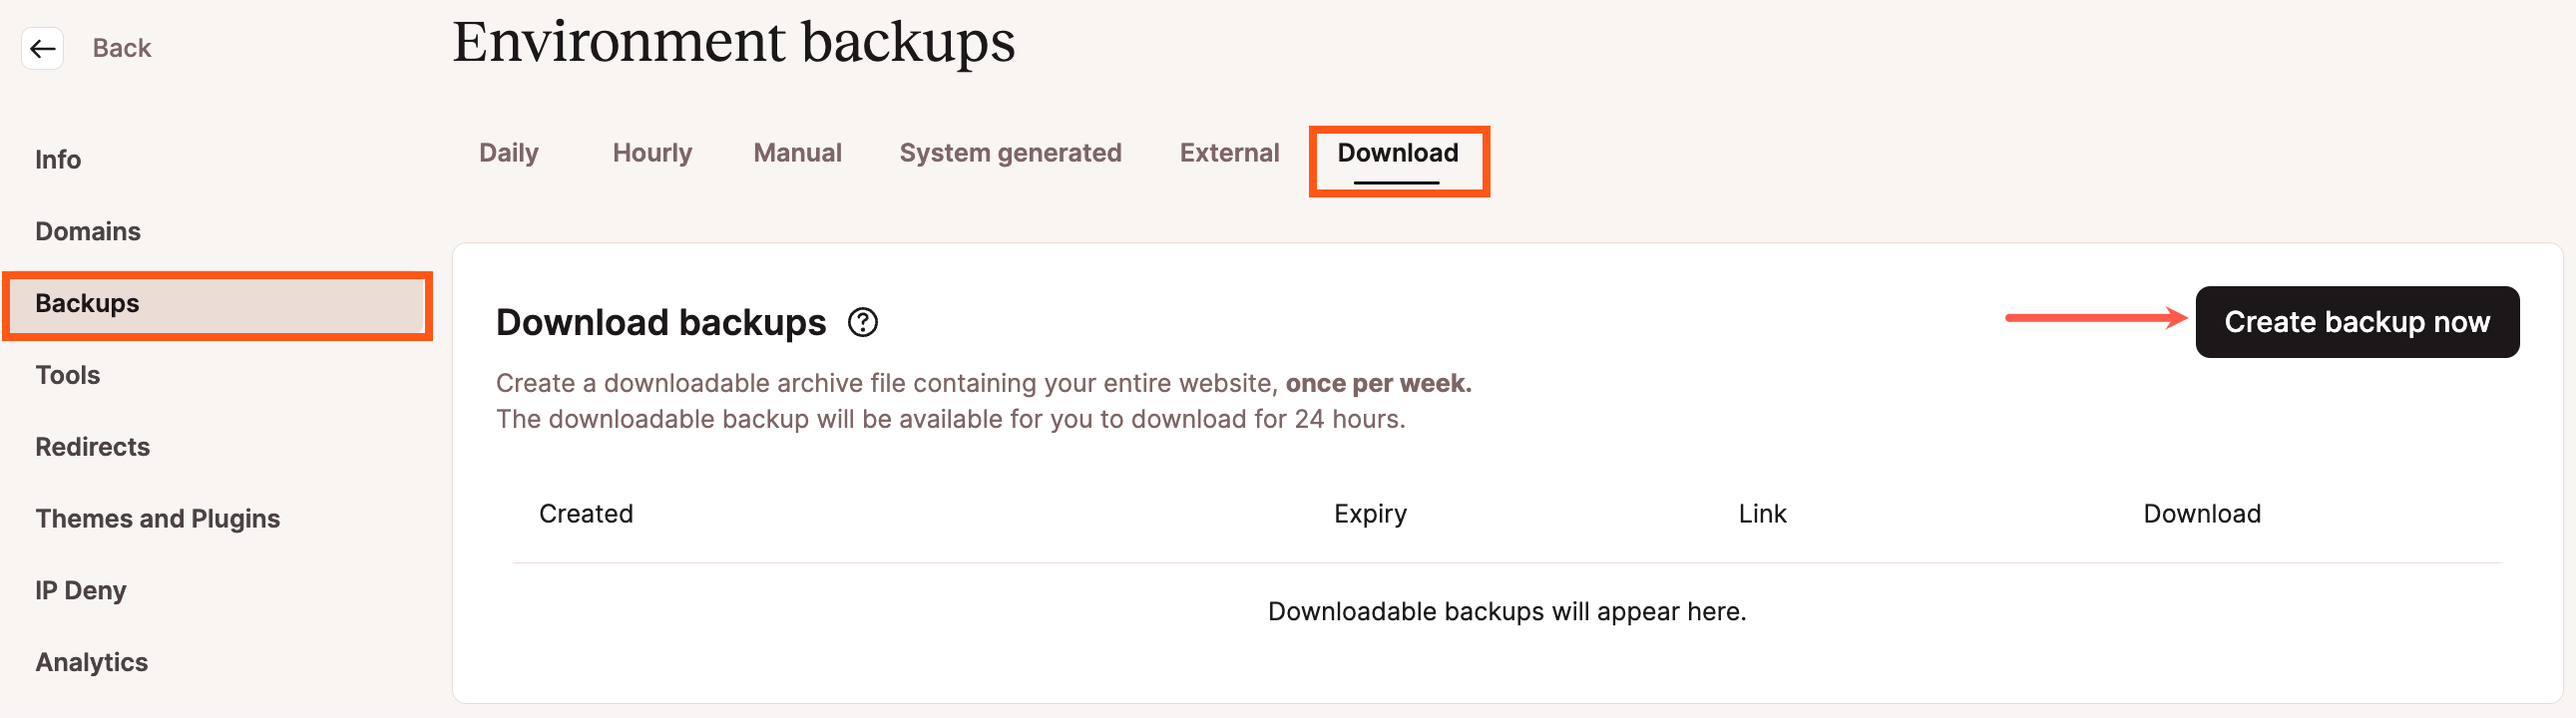 Downloadable backups in MyKinsta.